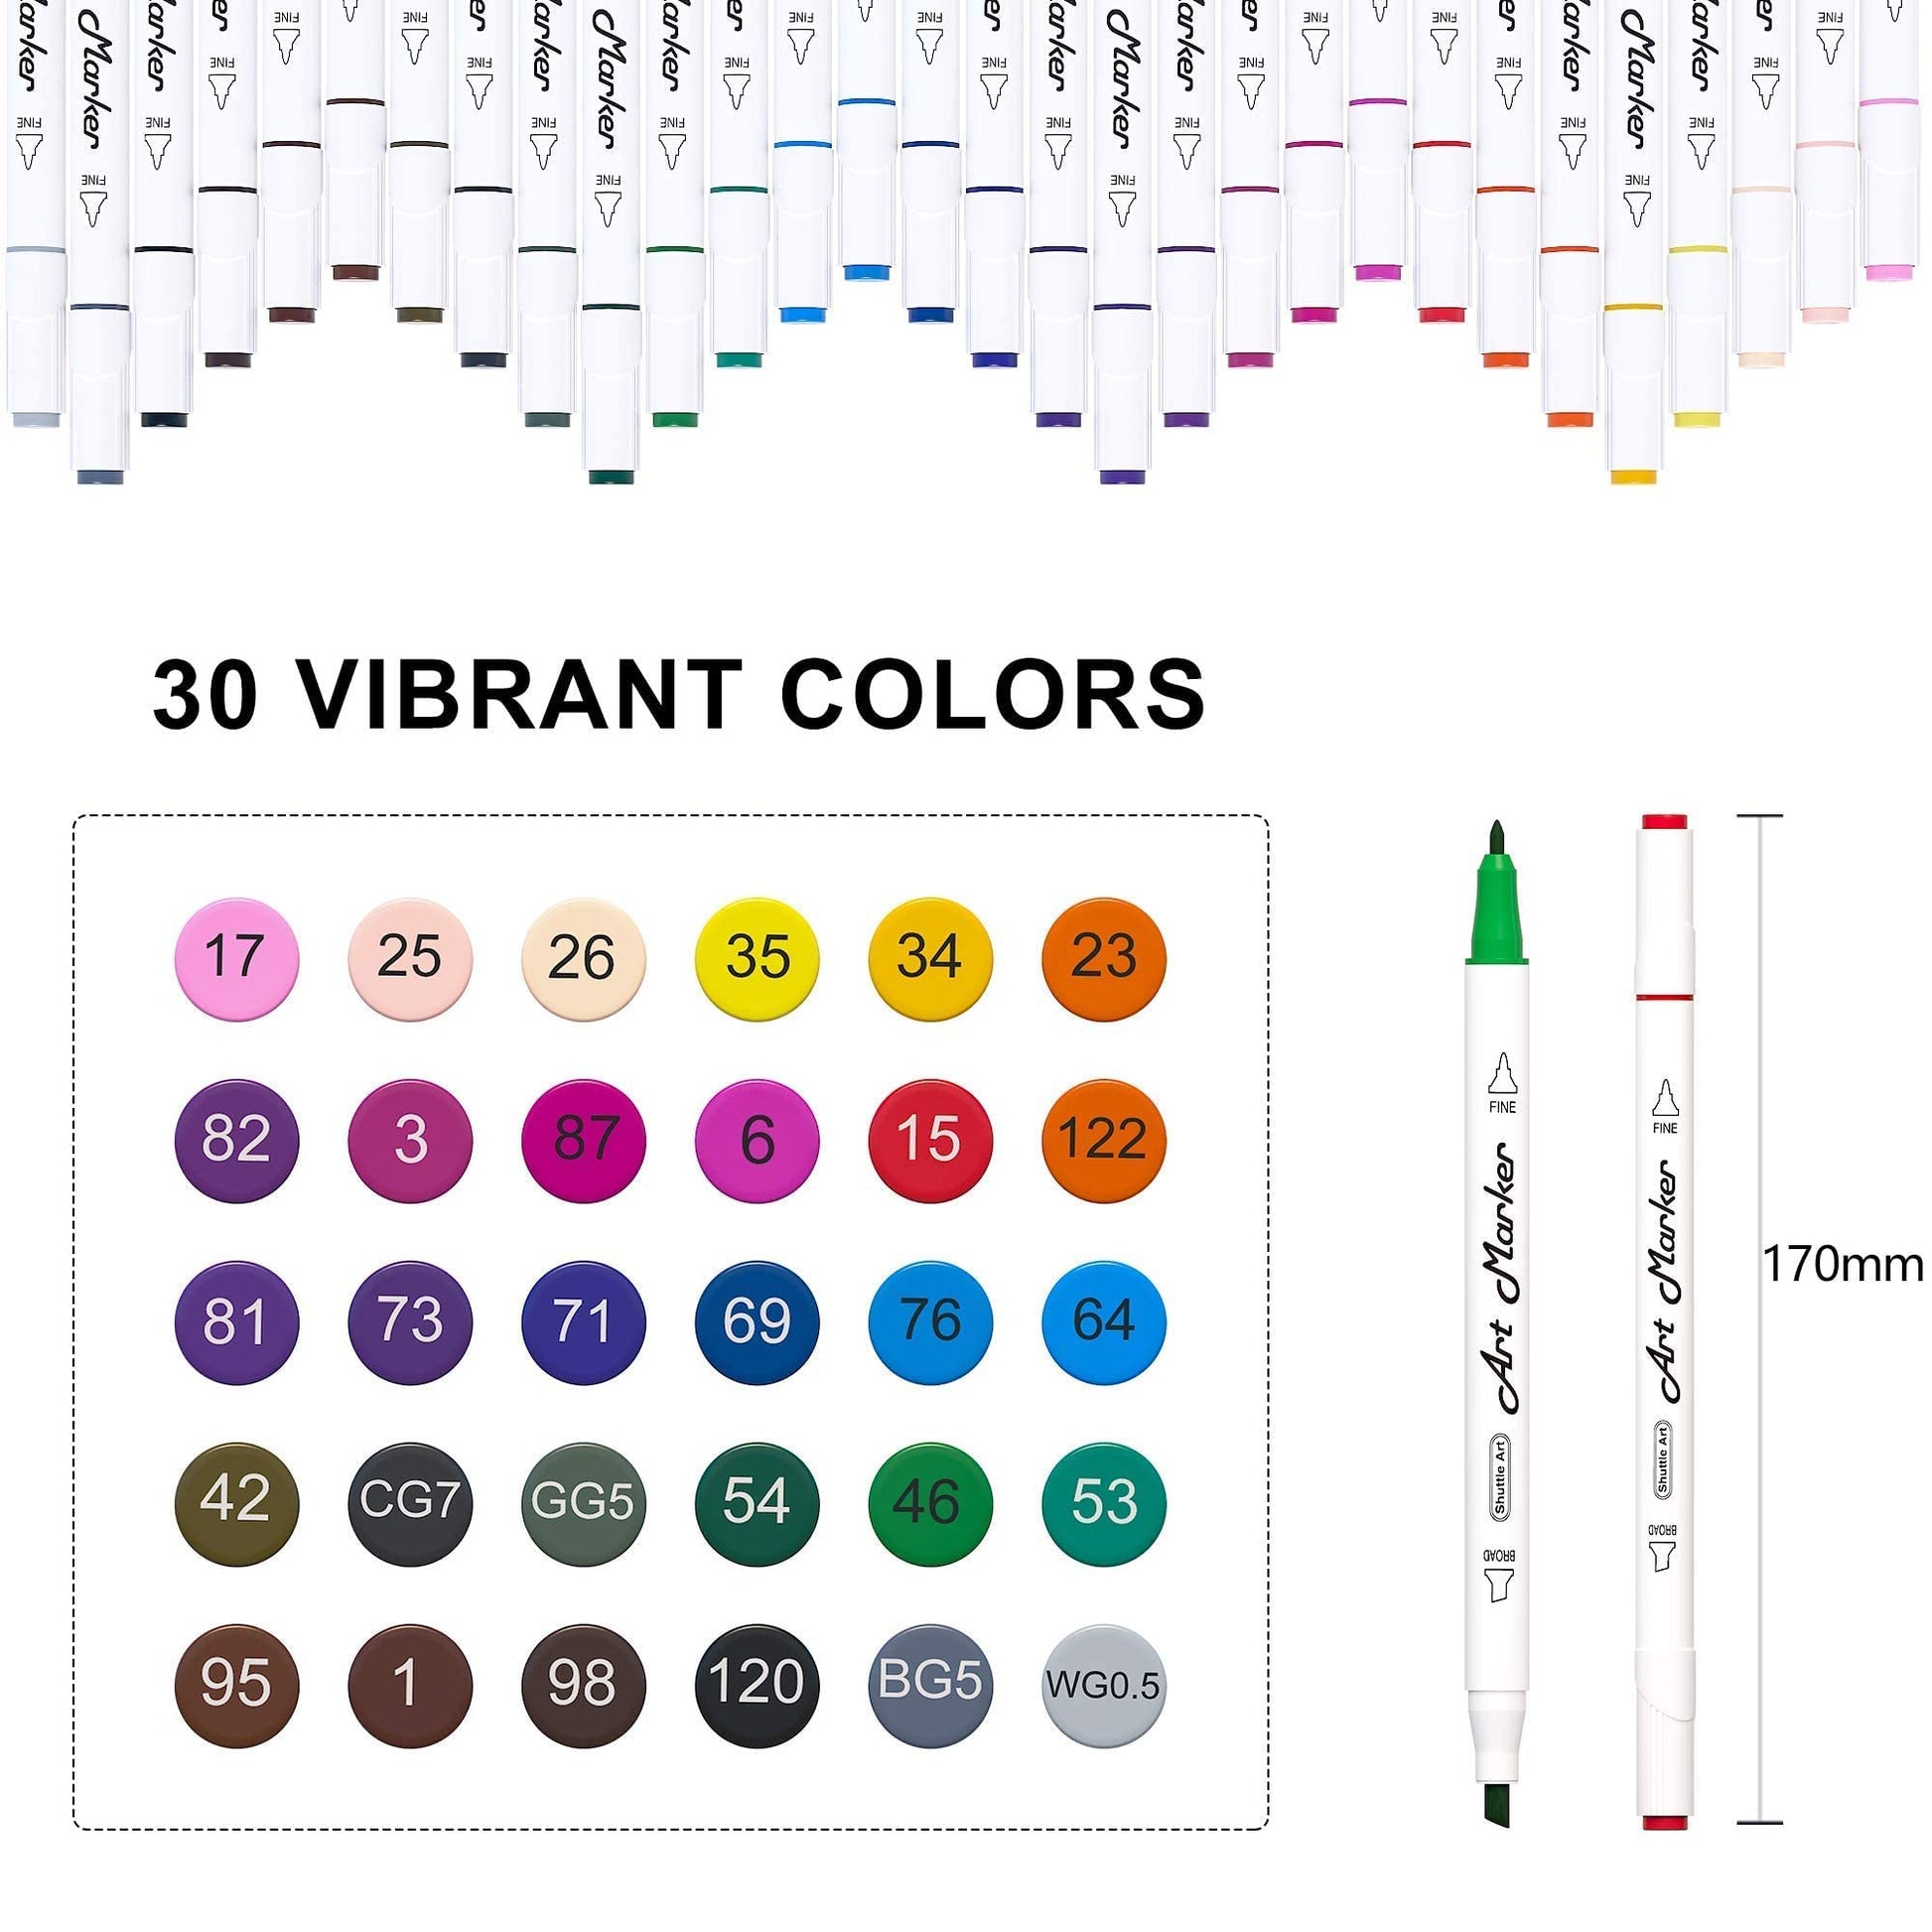 Shuttle Art Art Markers Bundle - 30 Colors Alcohol Markers + 36 Colors –  WoodArtSupply